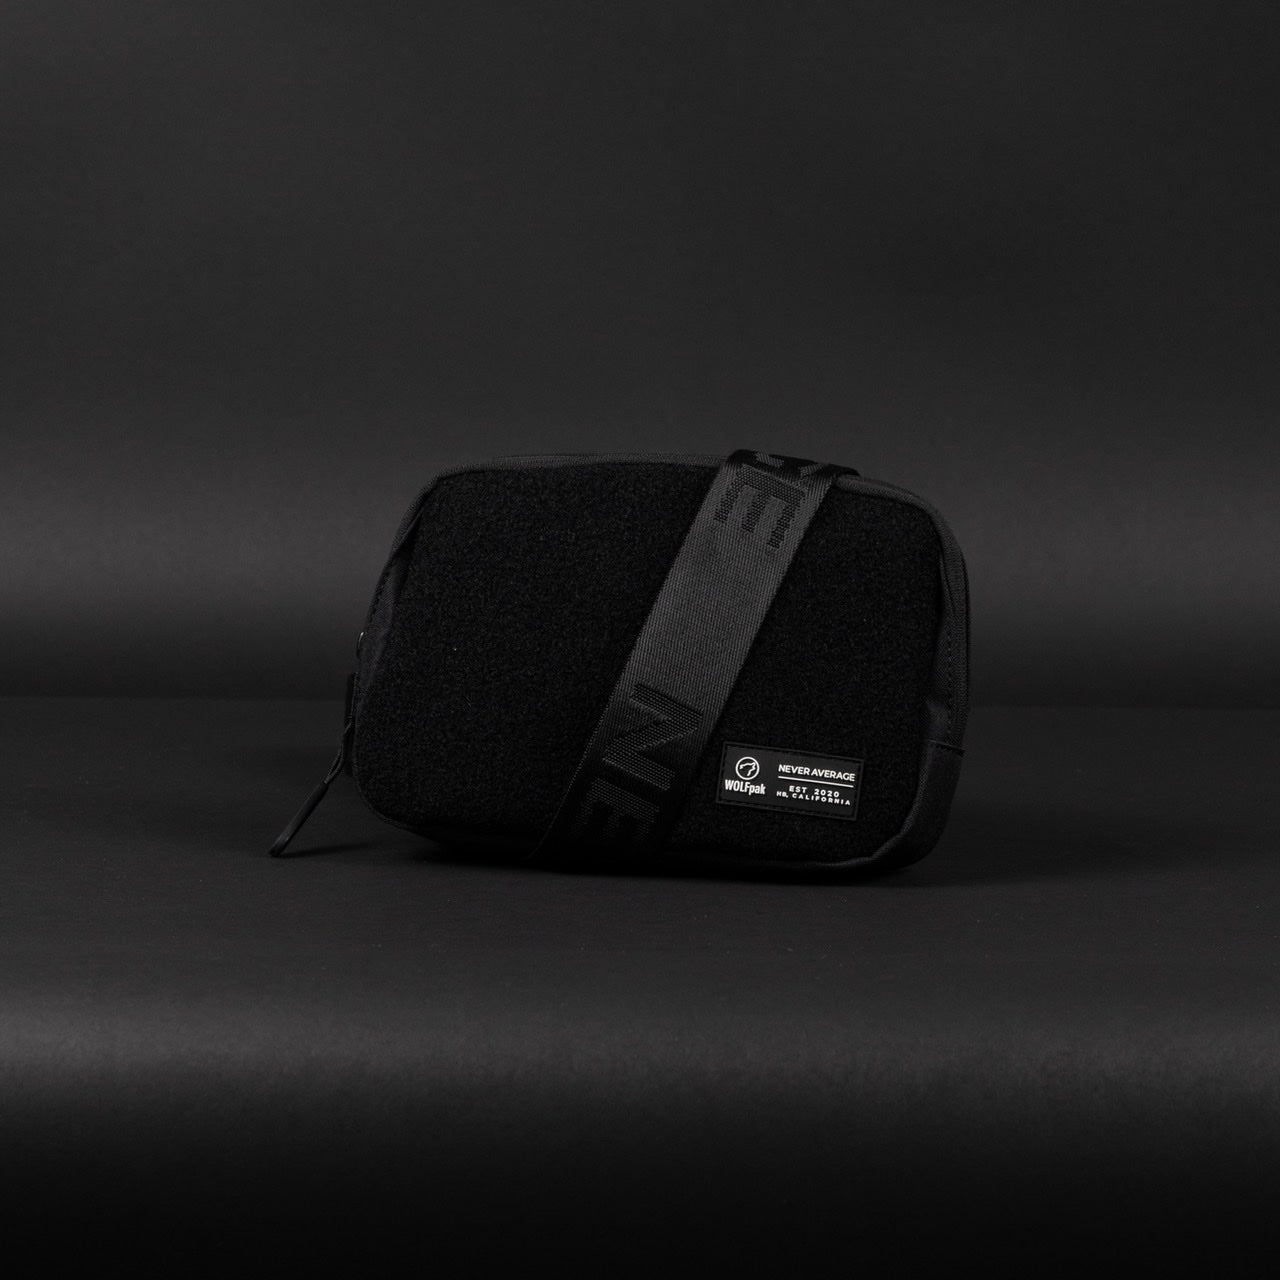 Crossbody Pack Alpha Black Velcro Front